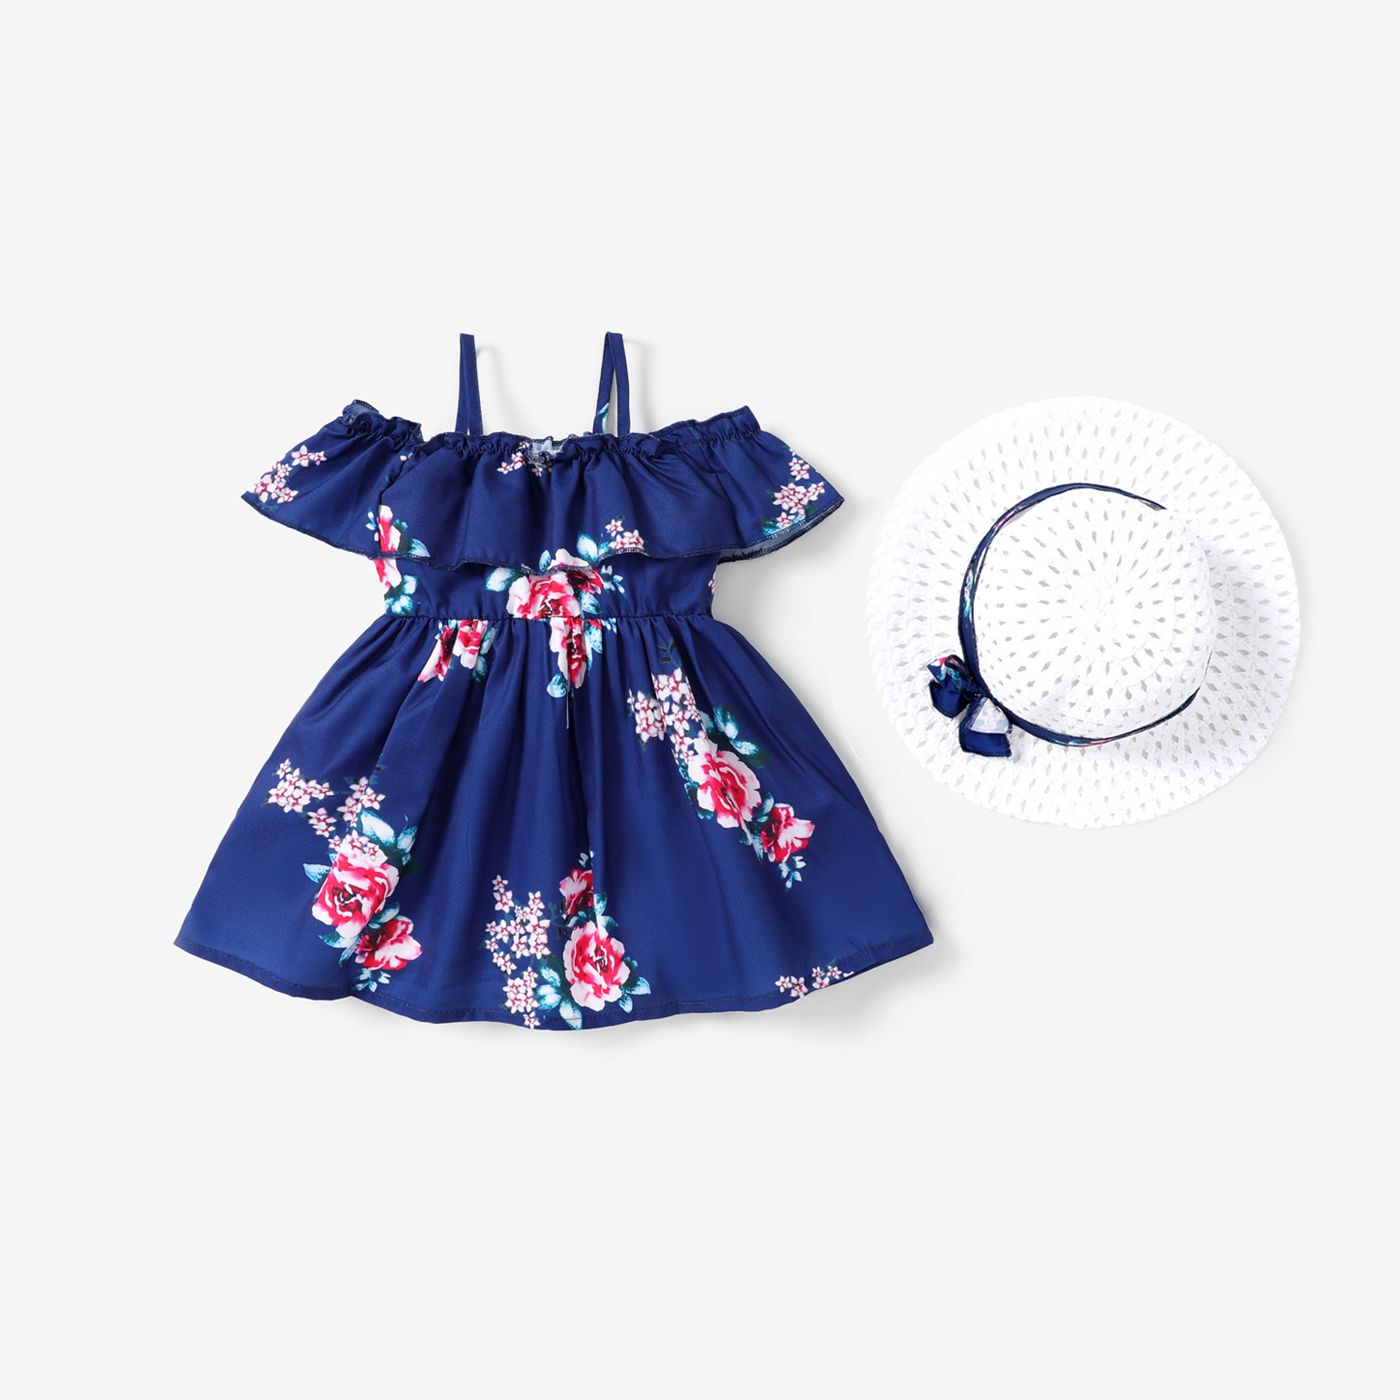 2pcs Baby Girl Floral Print Blue Sleeveless Spaghetti Strap Ruffle Dress with Hat Set